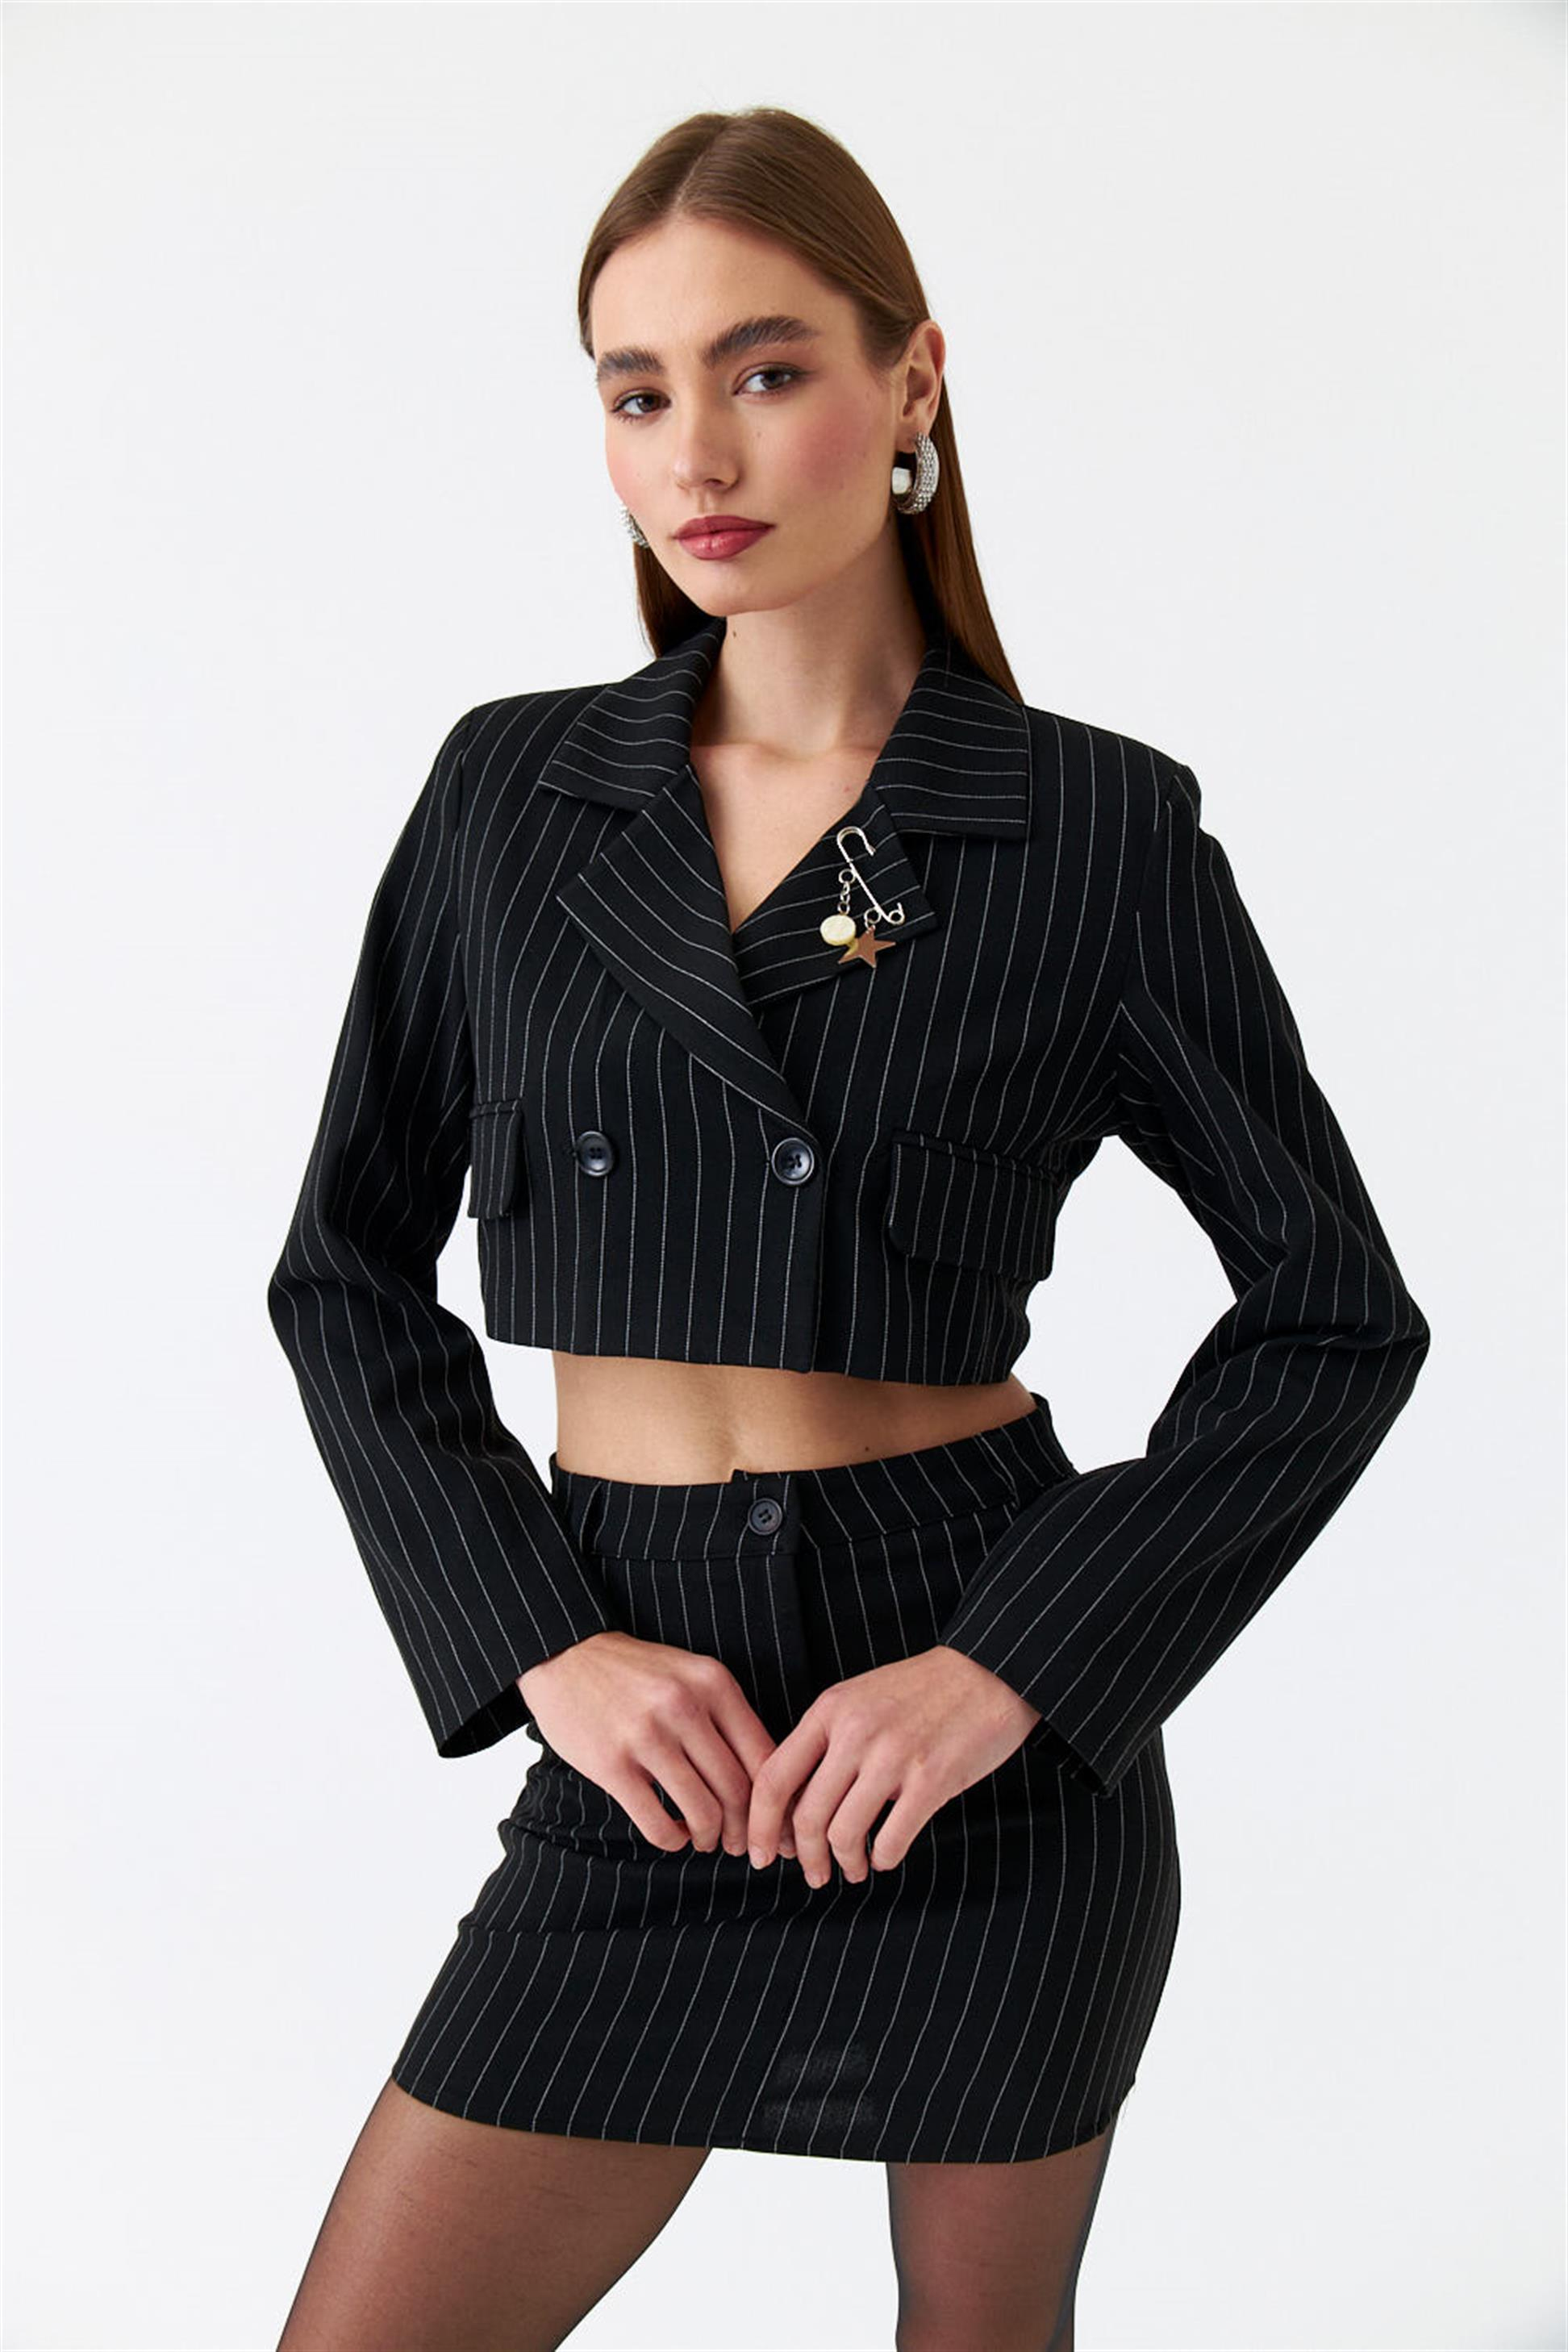 Blazer Striped Jacket Skirt Black Women's Suit | Tuba Boutique